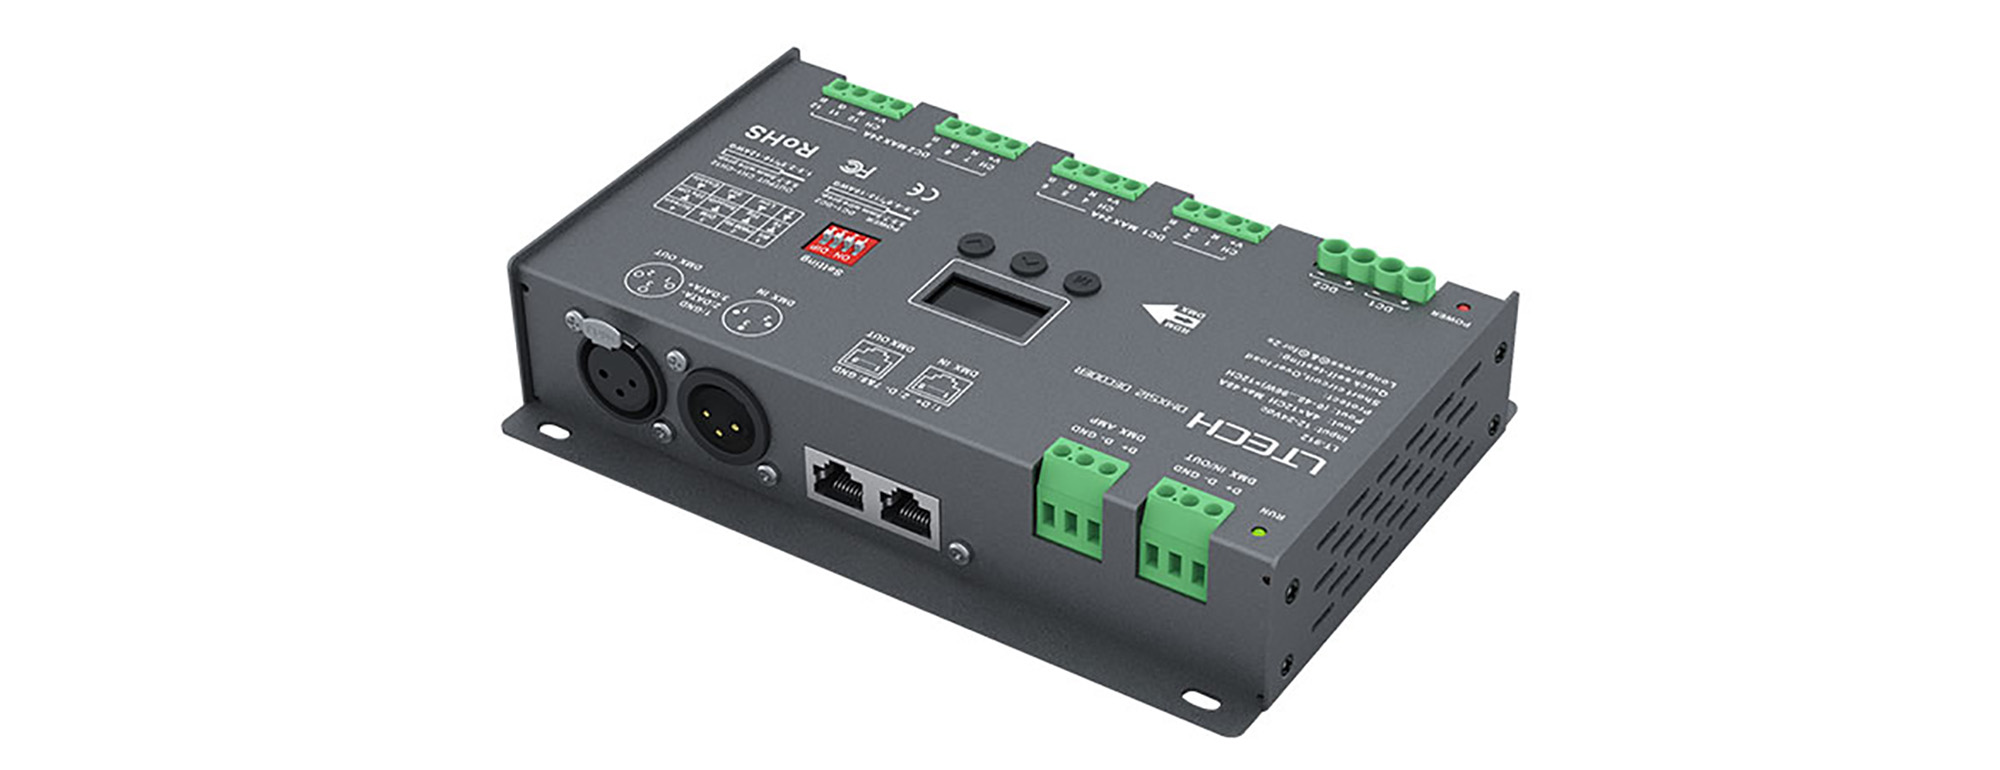 912  12Ch 4A CV DMX Decoder, 1152W Max.Power, XLR-3 , Green connector & RJ45 Port, Self testing, DMX512/RDM I/P signal, IP20.